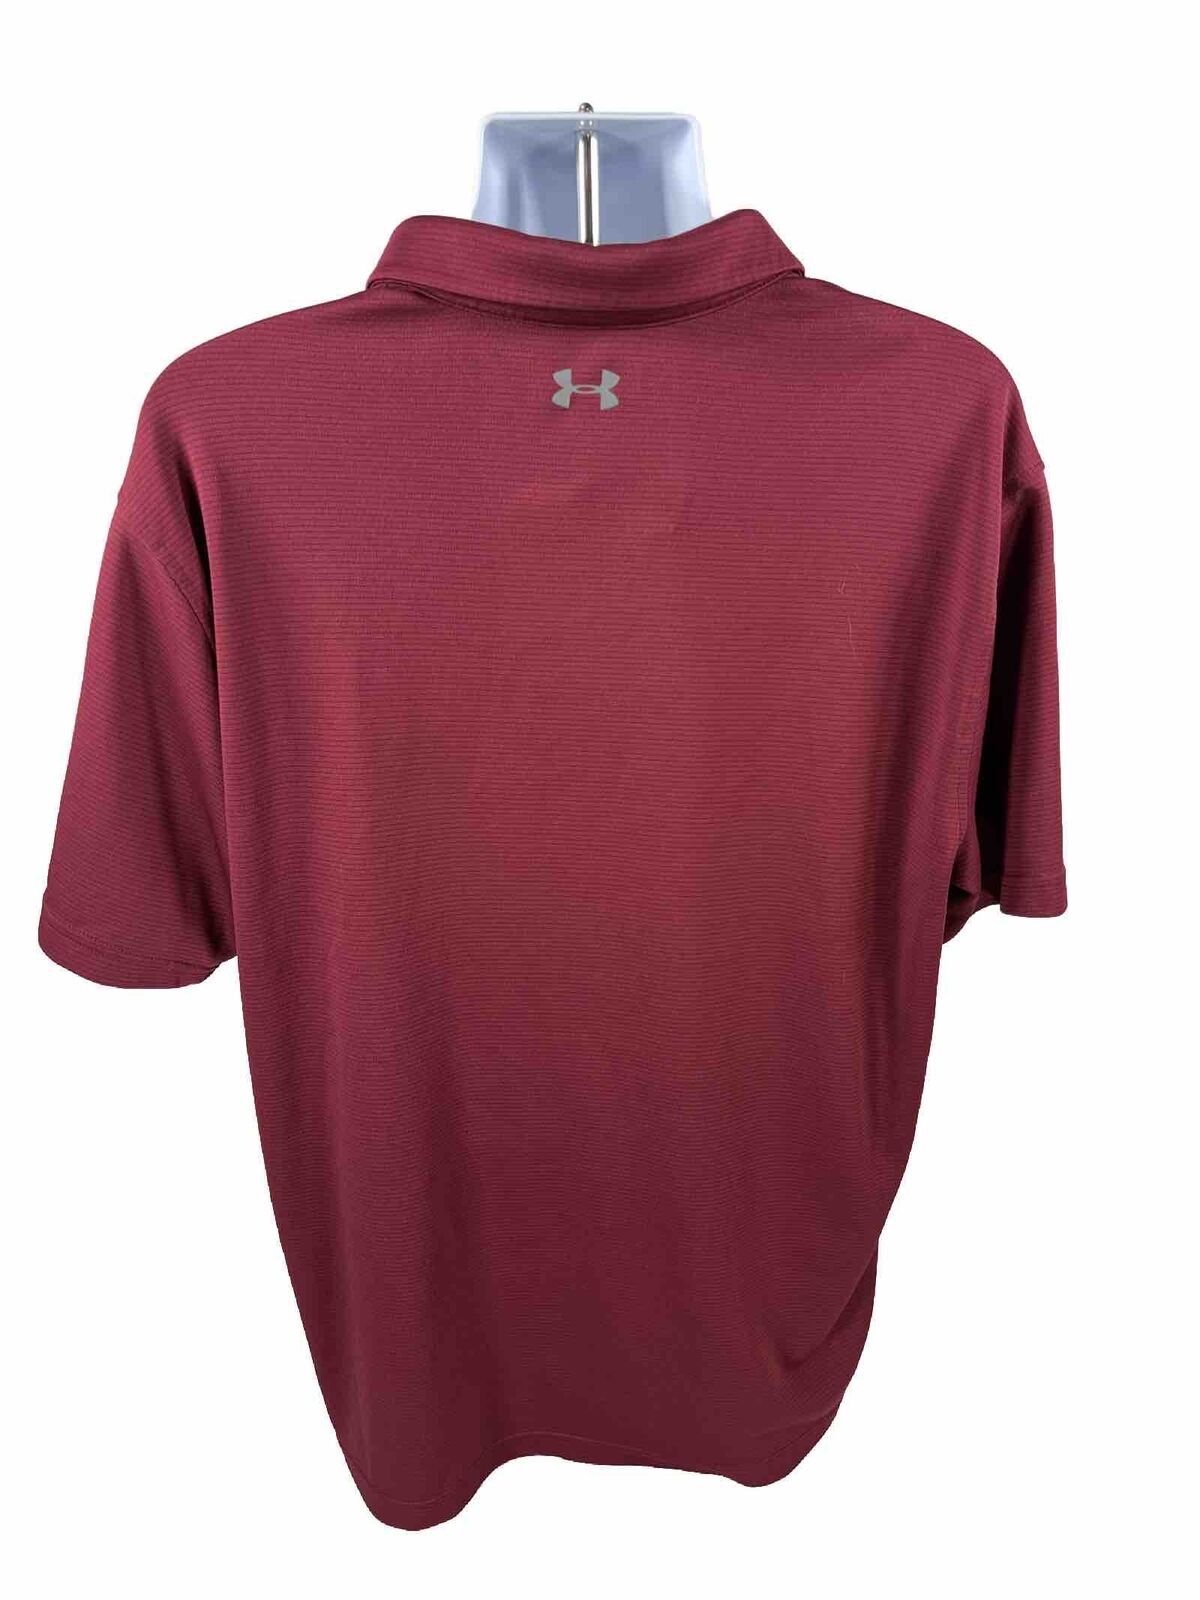 Under Armour Men's Red Burgundy HeatGear Short Sleeve Polo Shirt - 2XL